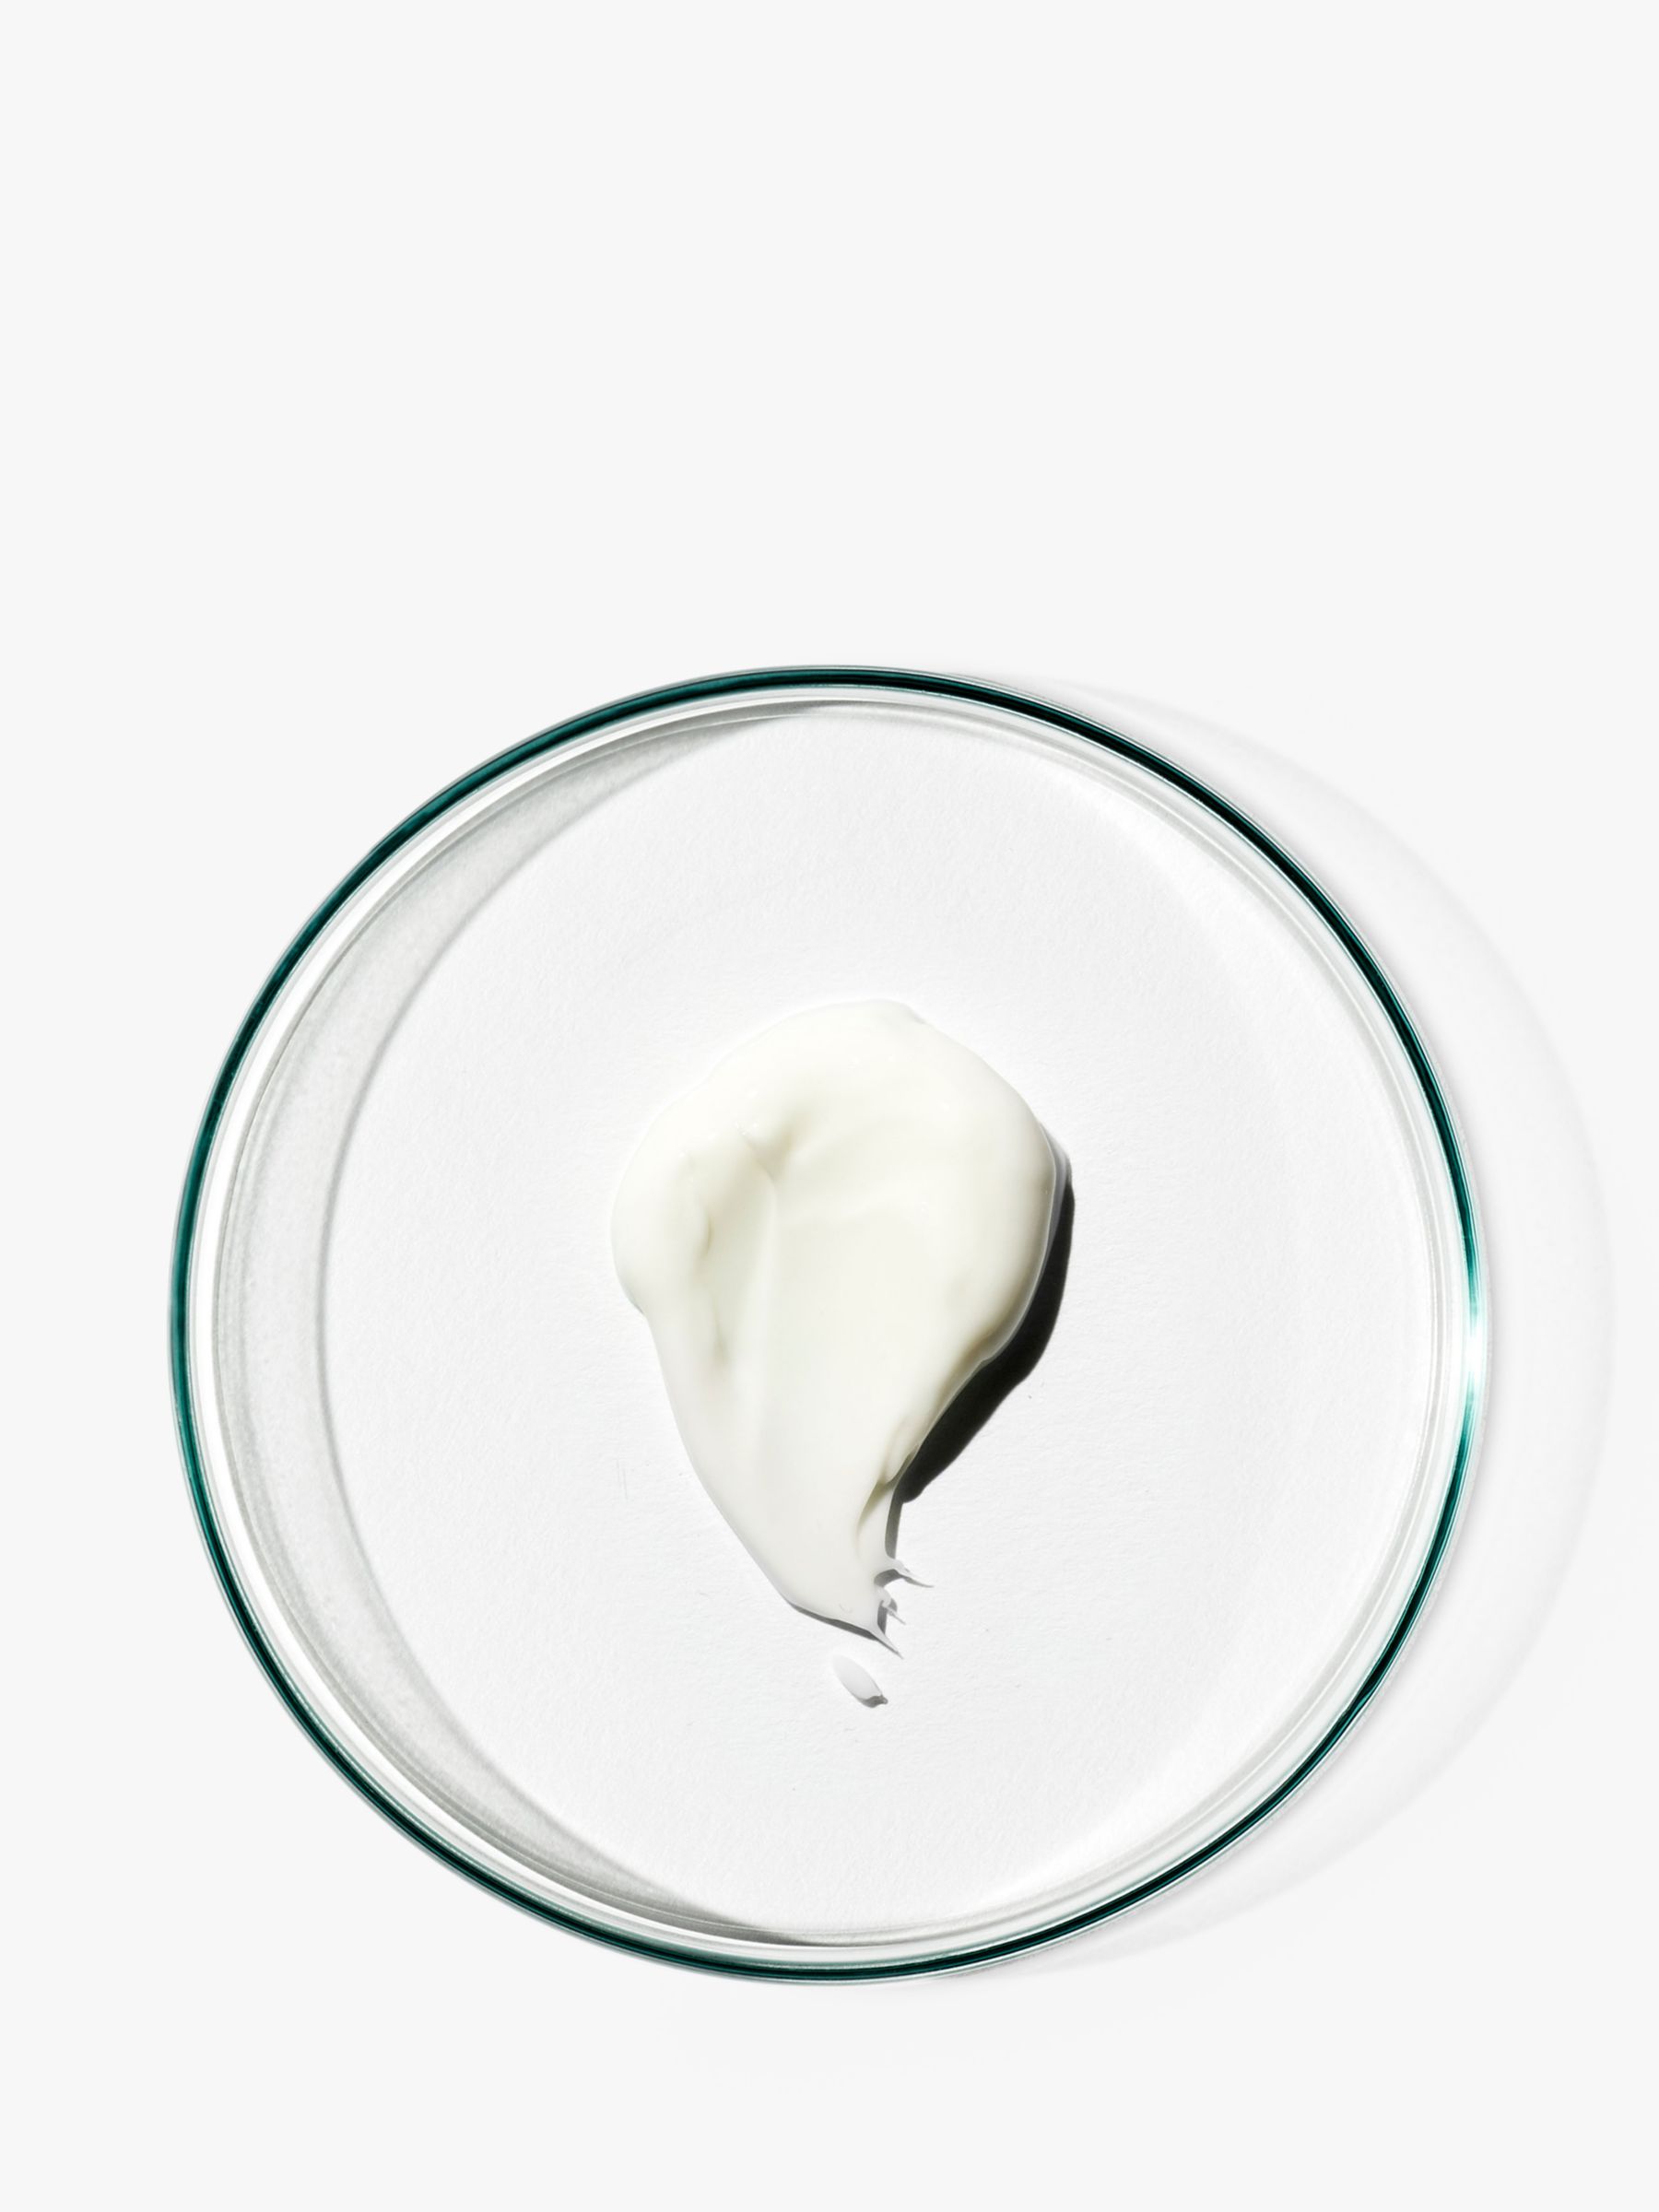 Grown Alchemist Detox Night Cream: Peptide-3, Echinacea, Reishi Extract, 40ml 4